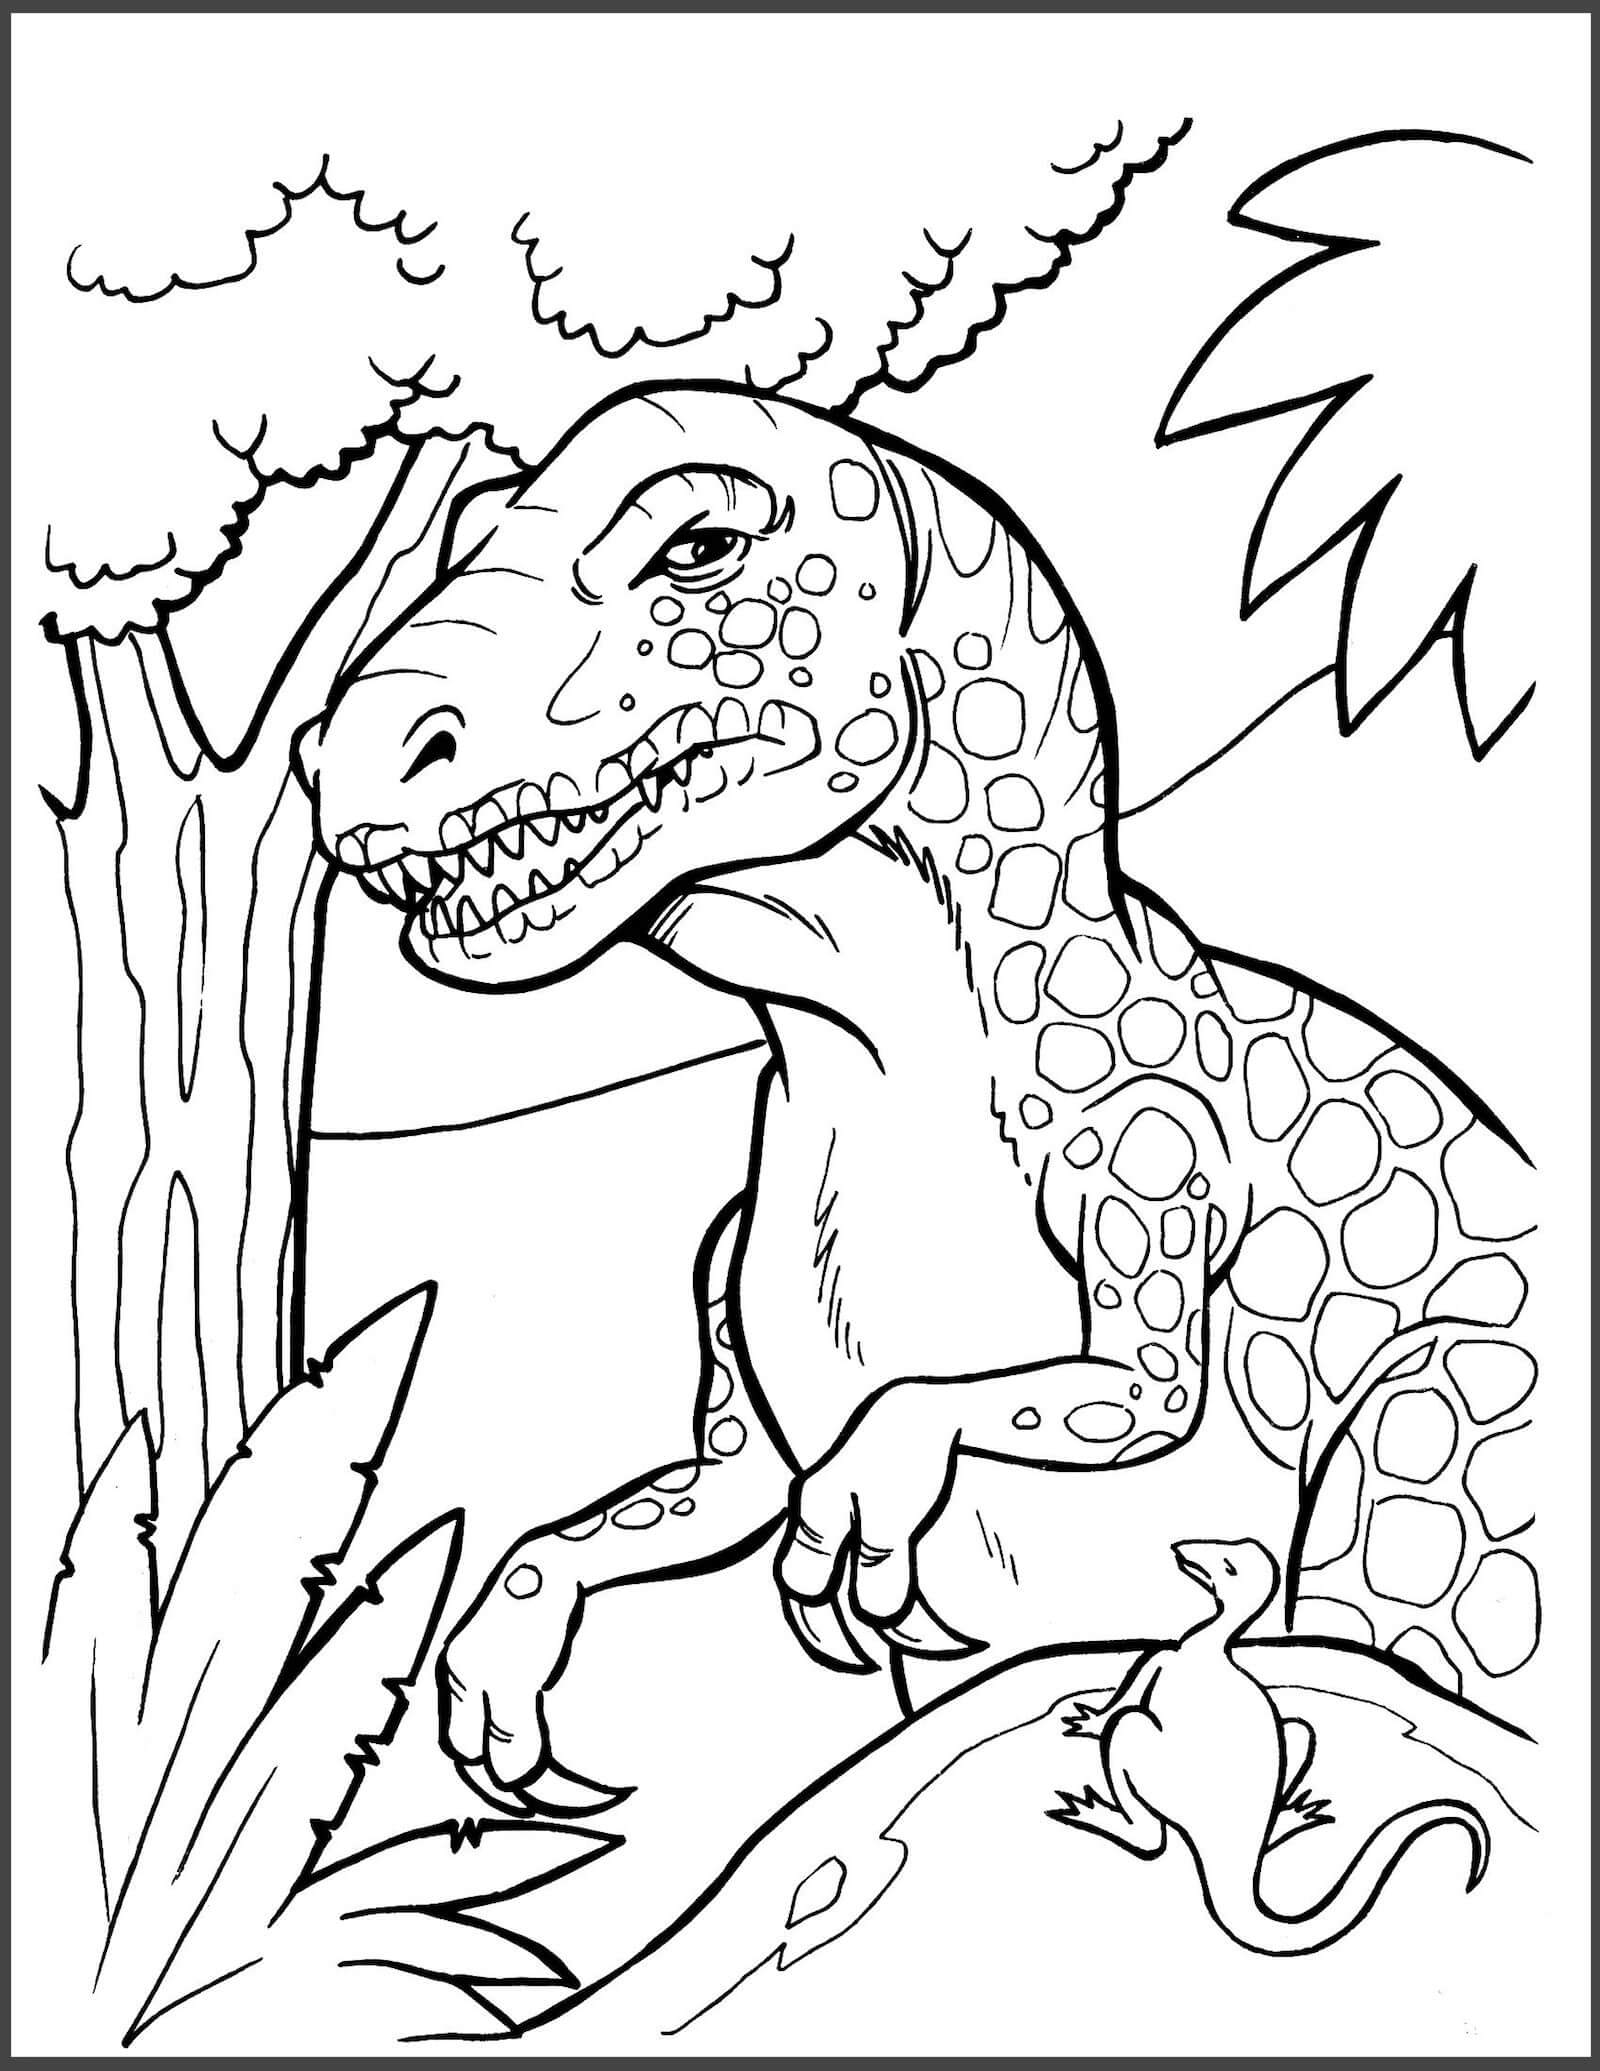 T-Rex 초상화 coloring page